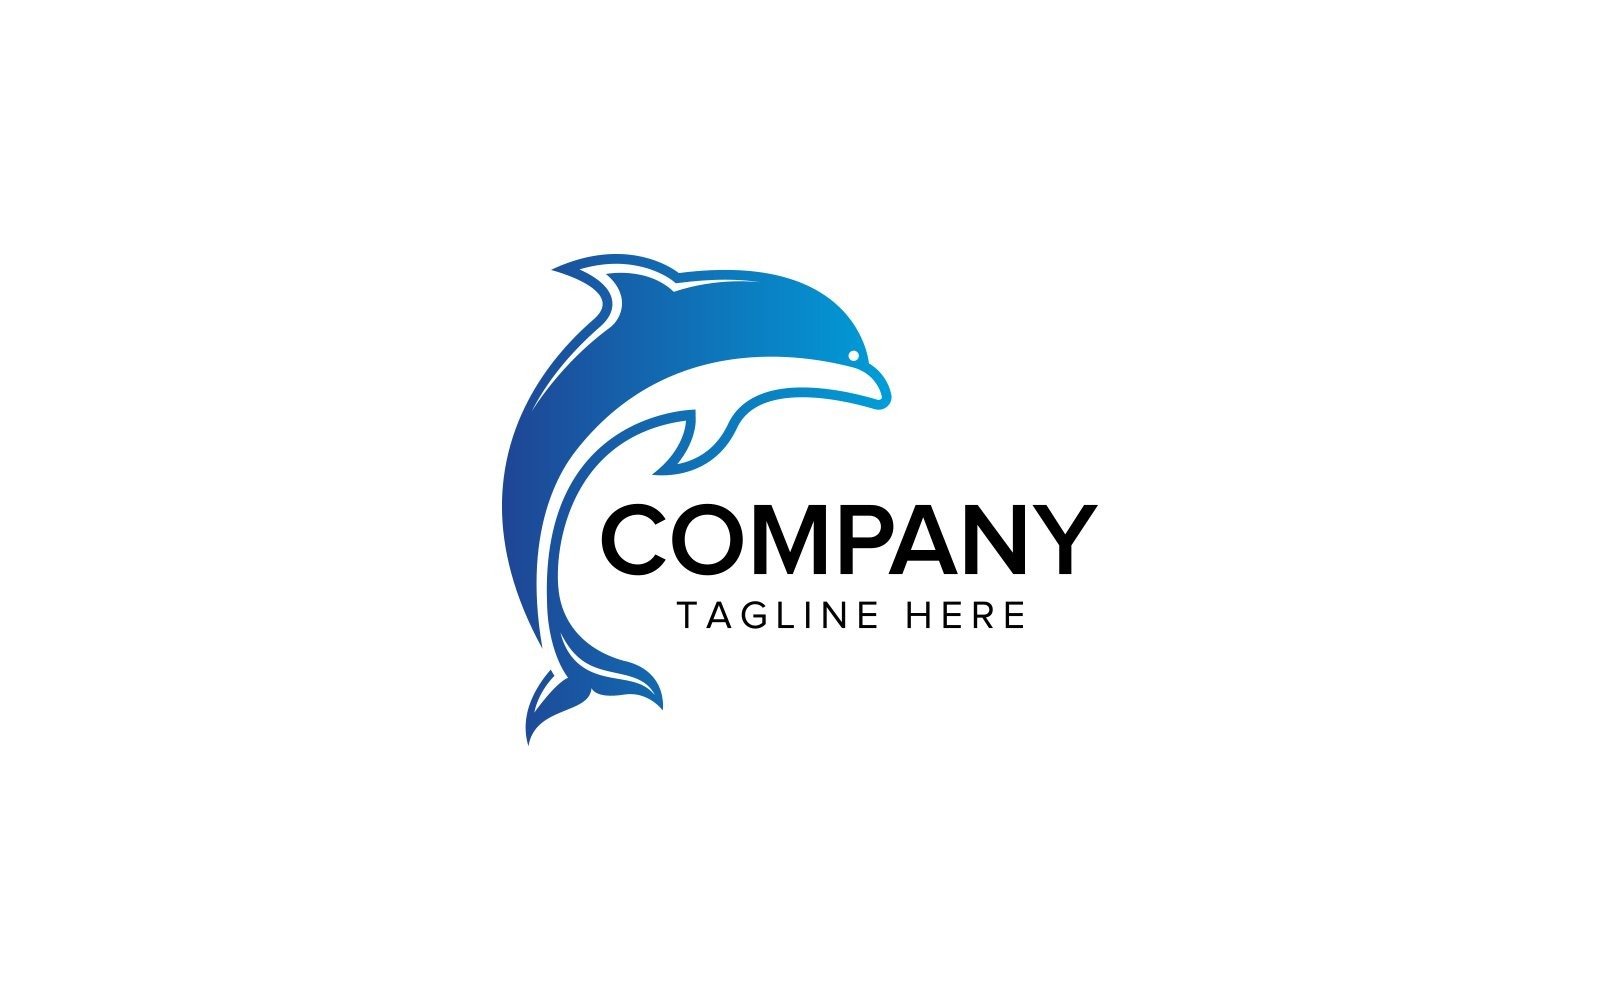 Dolphin Logo Design Illustration #188938 - TemplateMonster